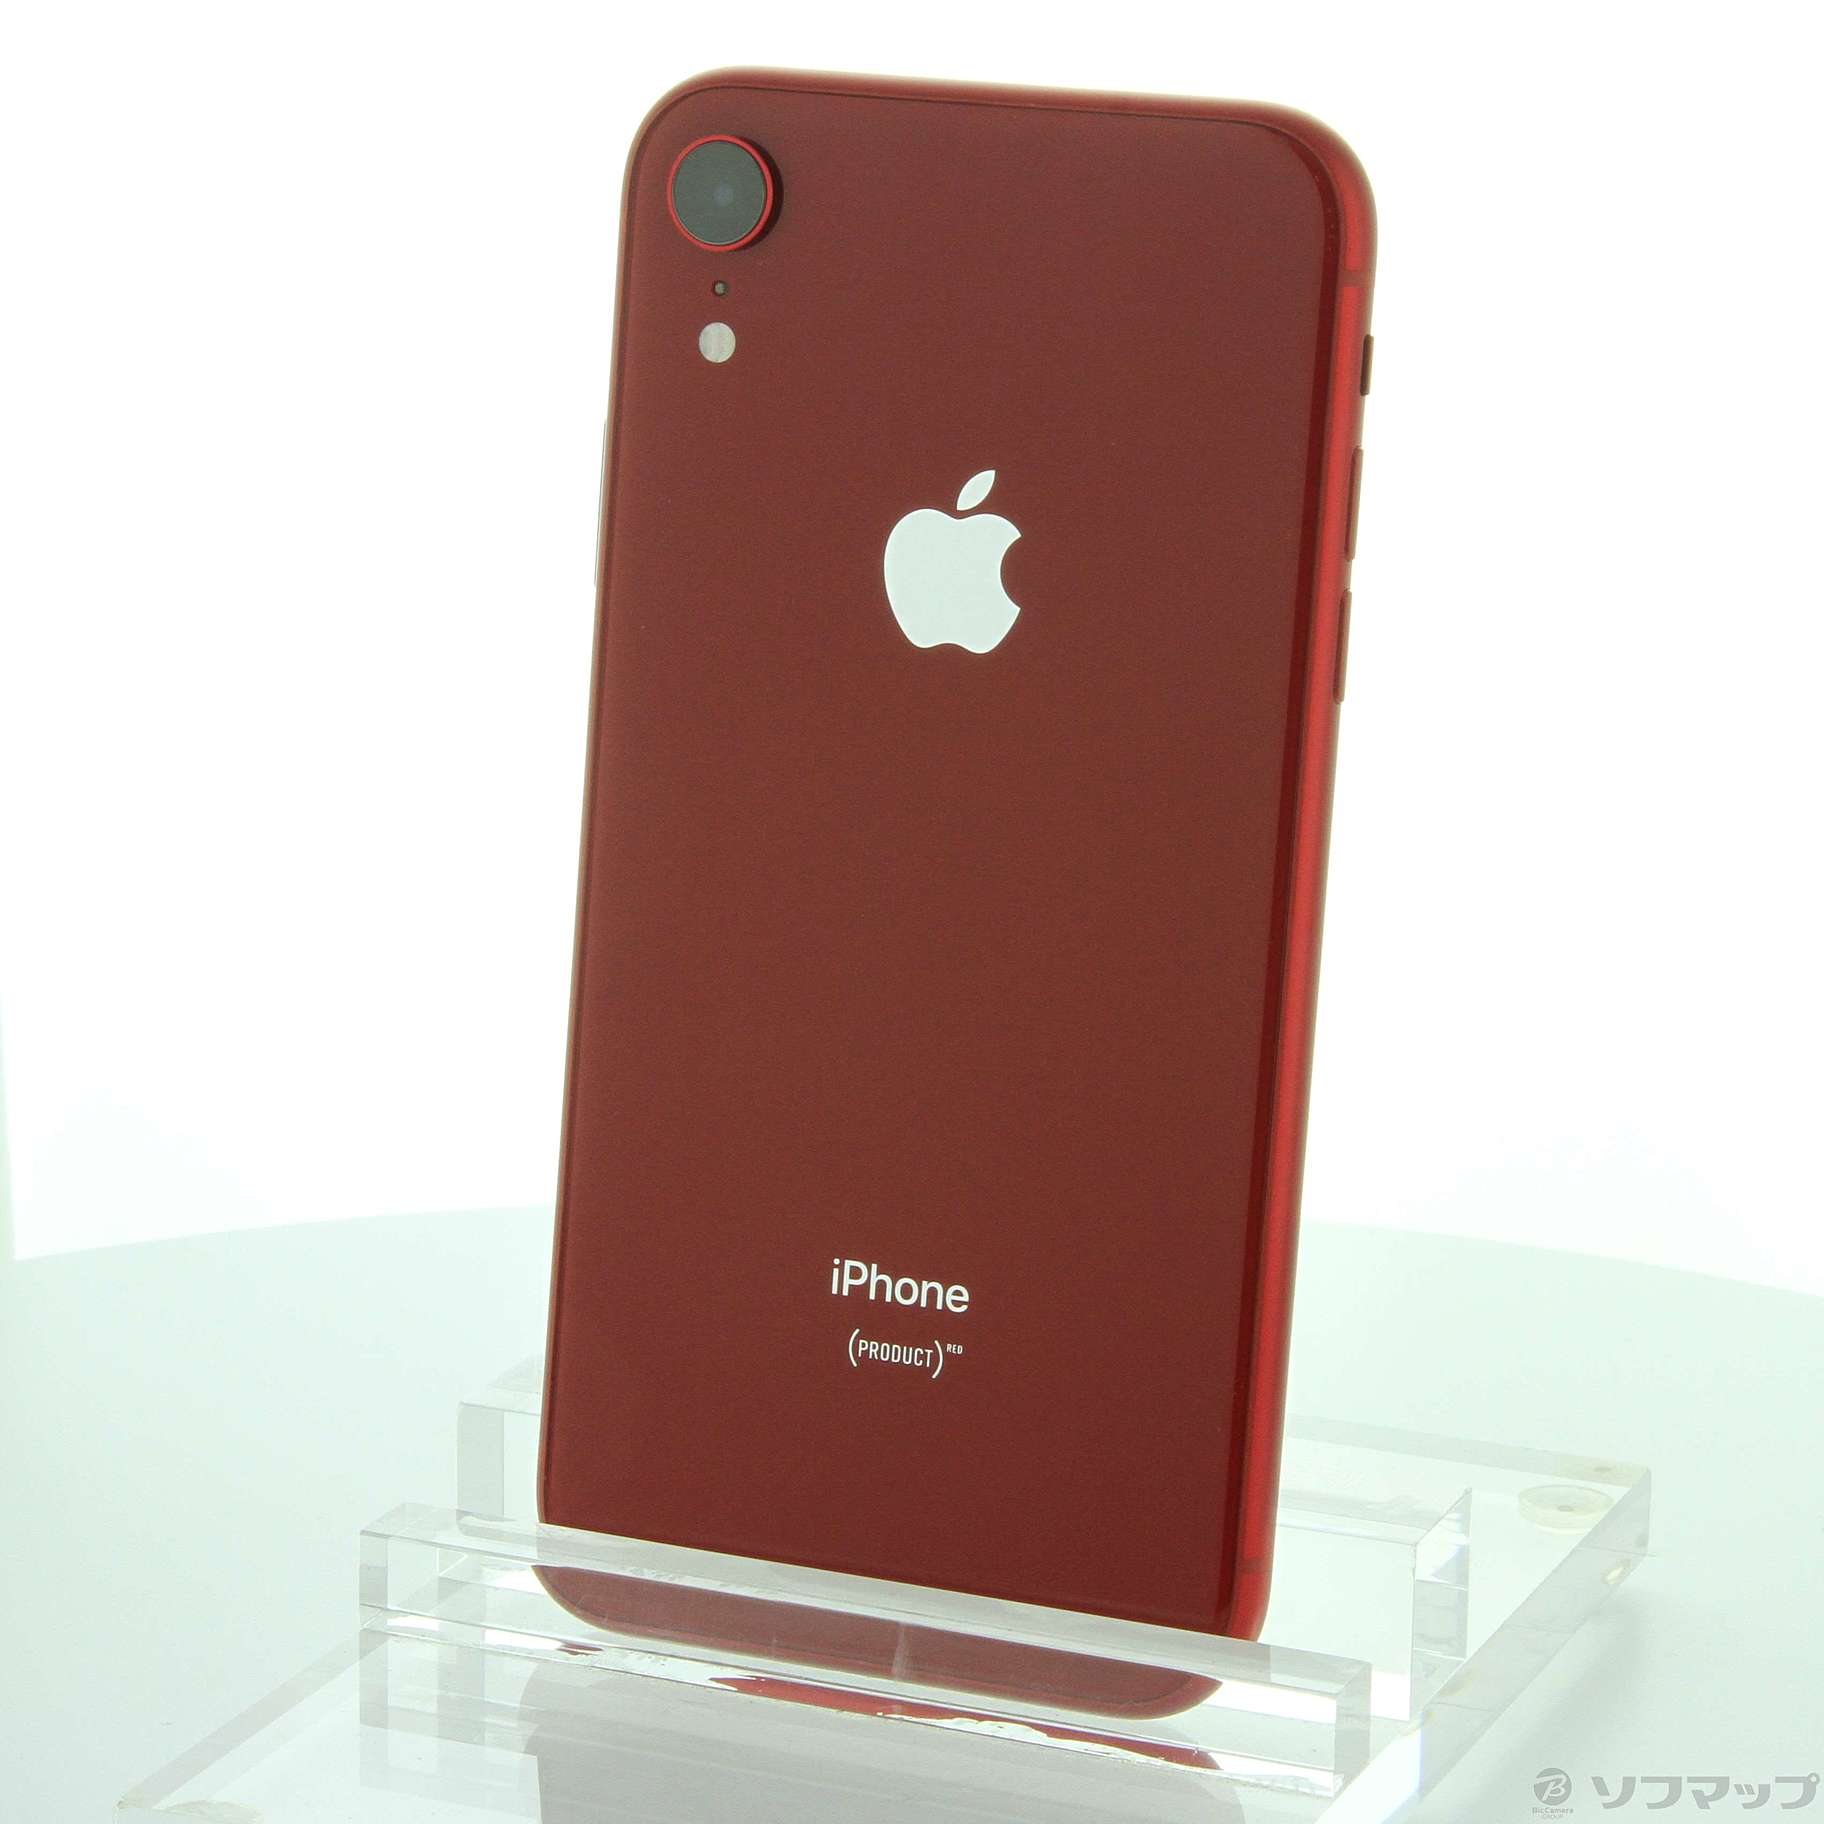 iPhone XR (PRODUCT)RED 64GB SIMフリー [レッド] 中古(白ロム)価格